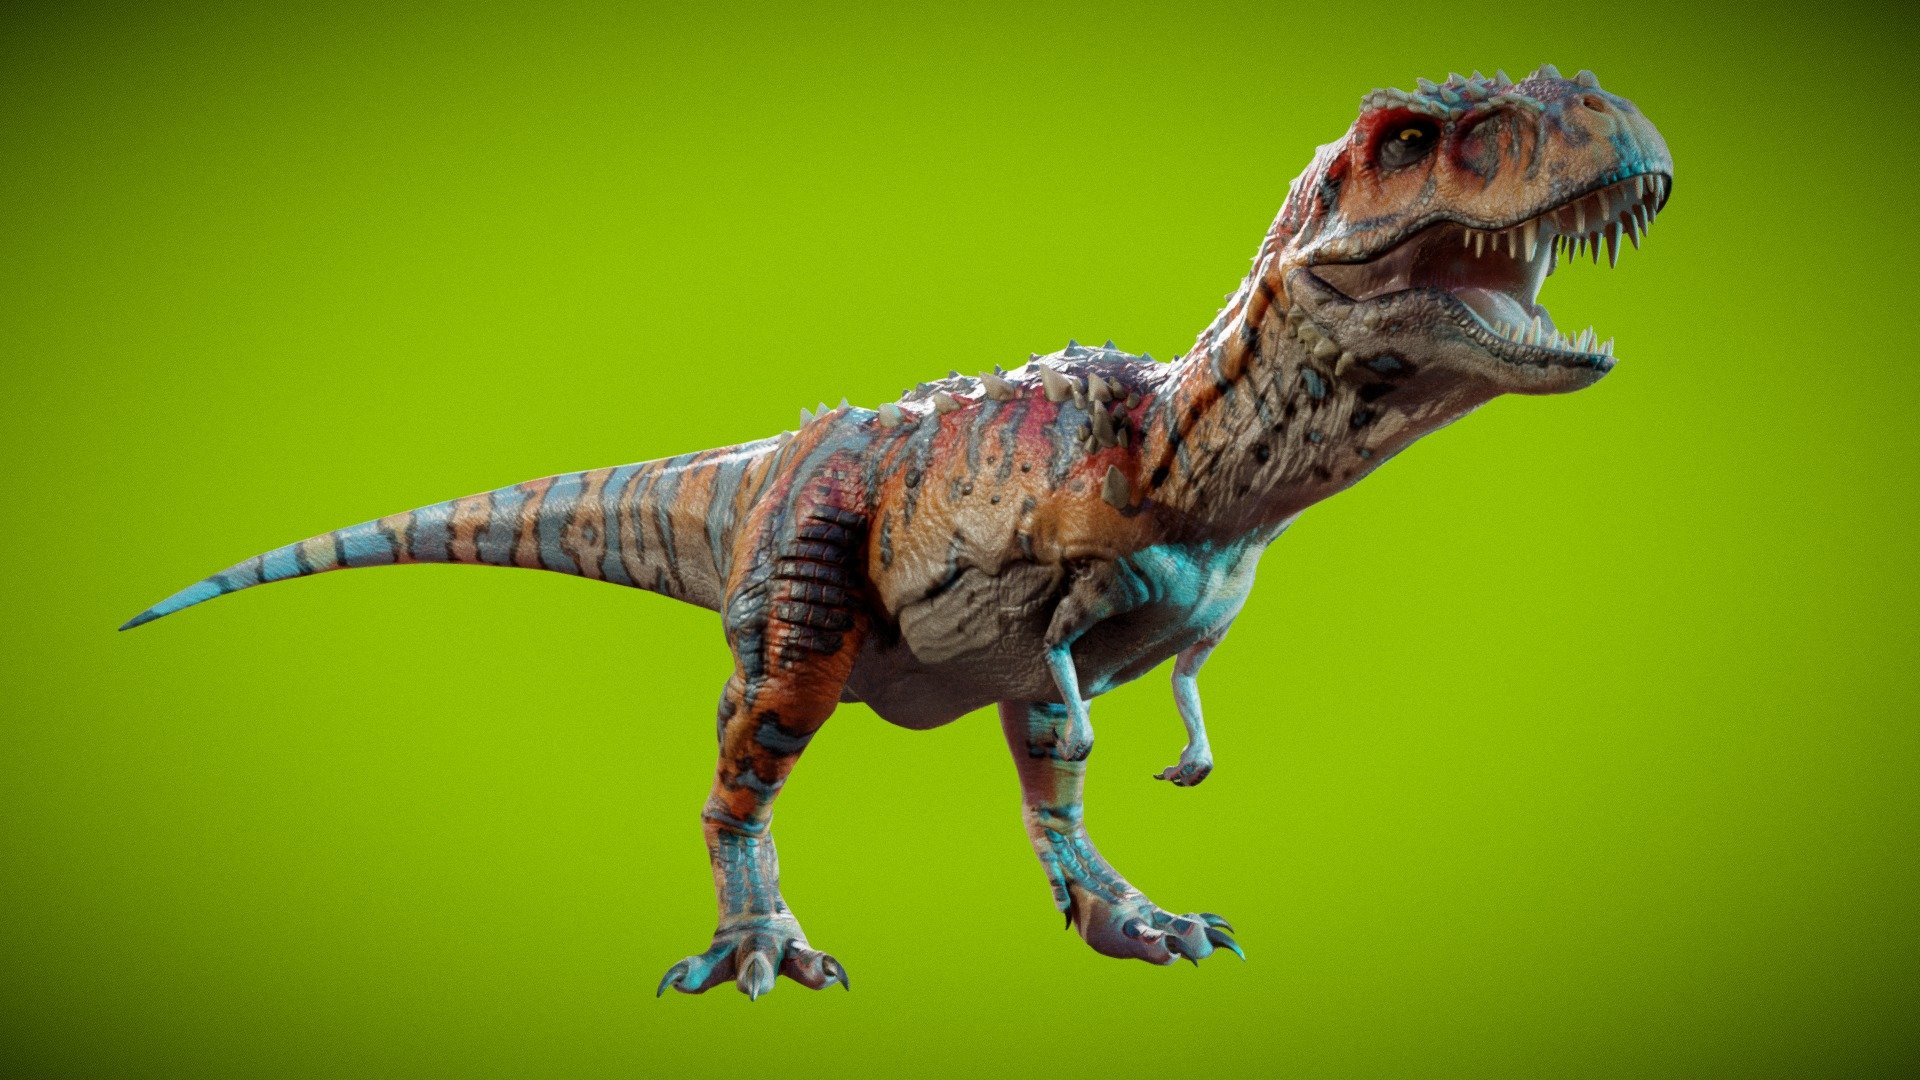 Hello everyone ;) I've made this t-rex model.

ARTSTATION: www.artstation.com/hokiroya

FACEBOOK: www.facebook.com/Hokiroya/ - Tyrannosaurus Rex - 3D model by hokiroya 3d model